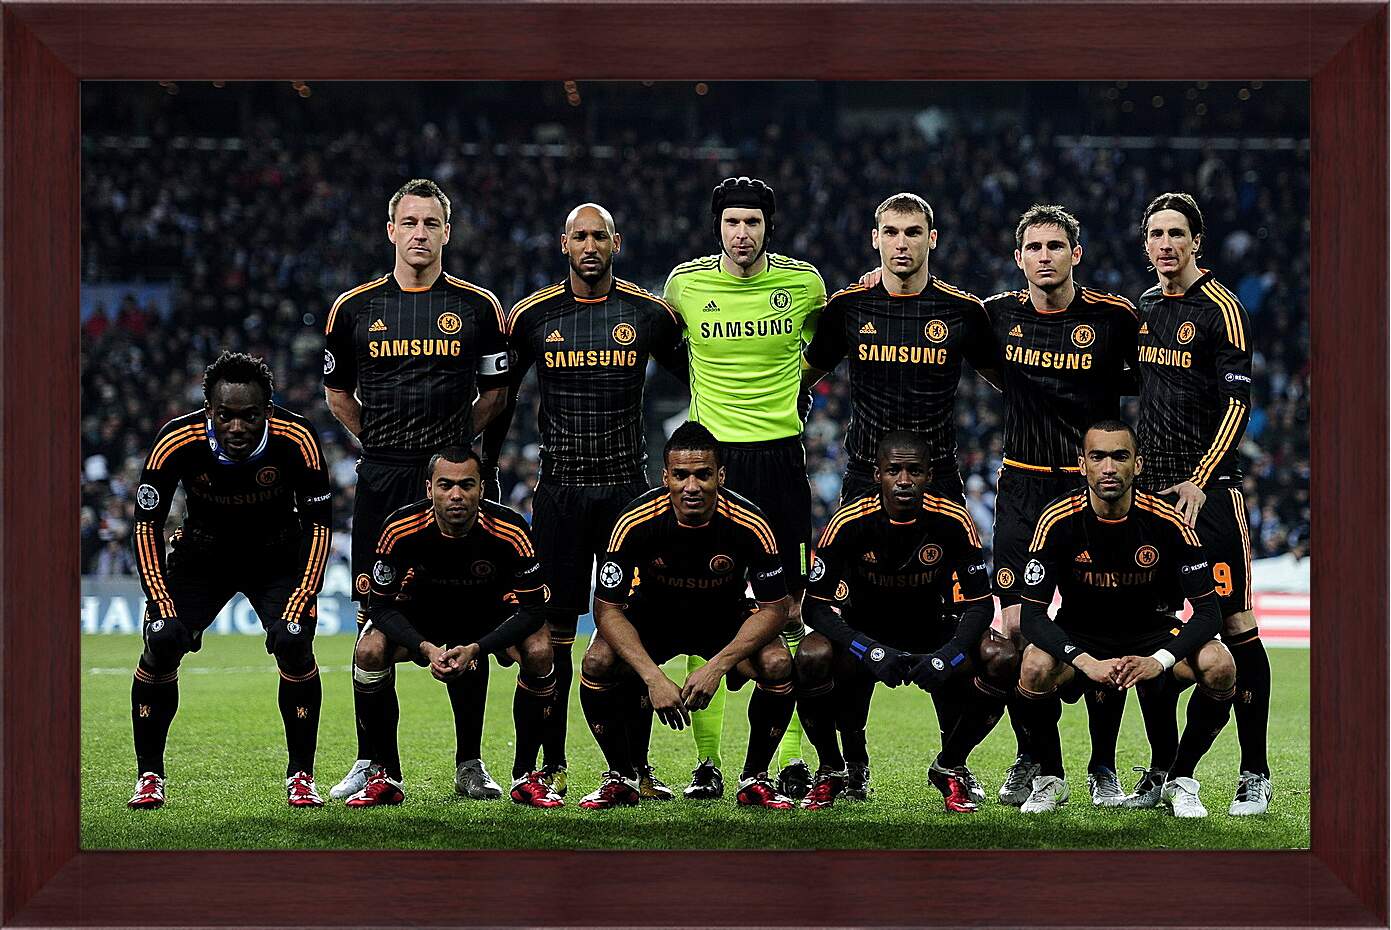 Картина в раме - Фото перед матчем ФК Челси